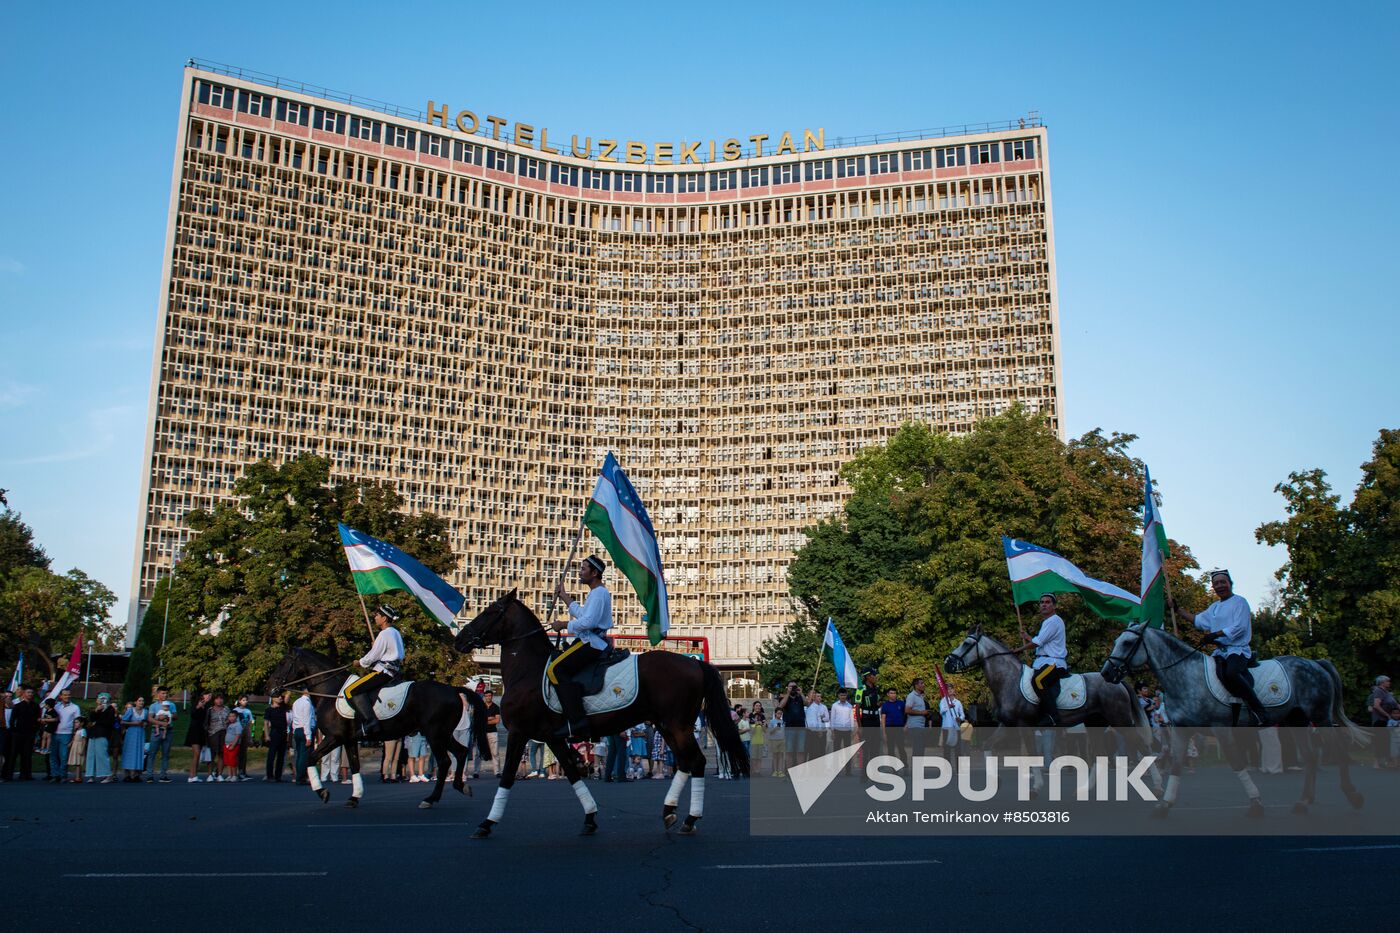 Uzbekistan Horse Parade